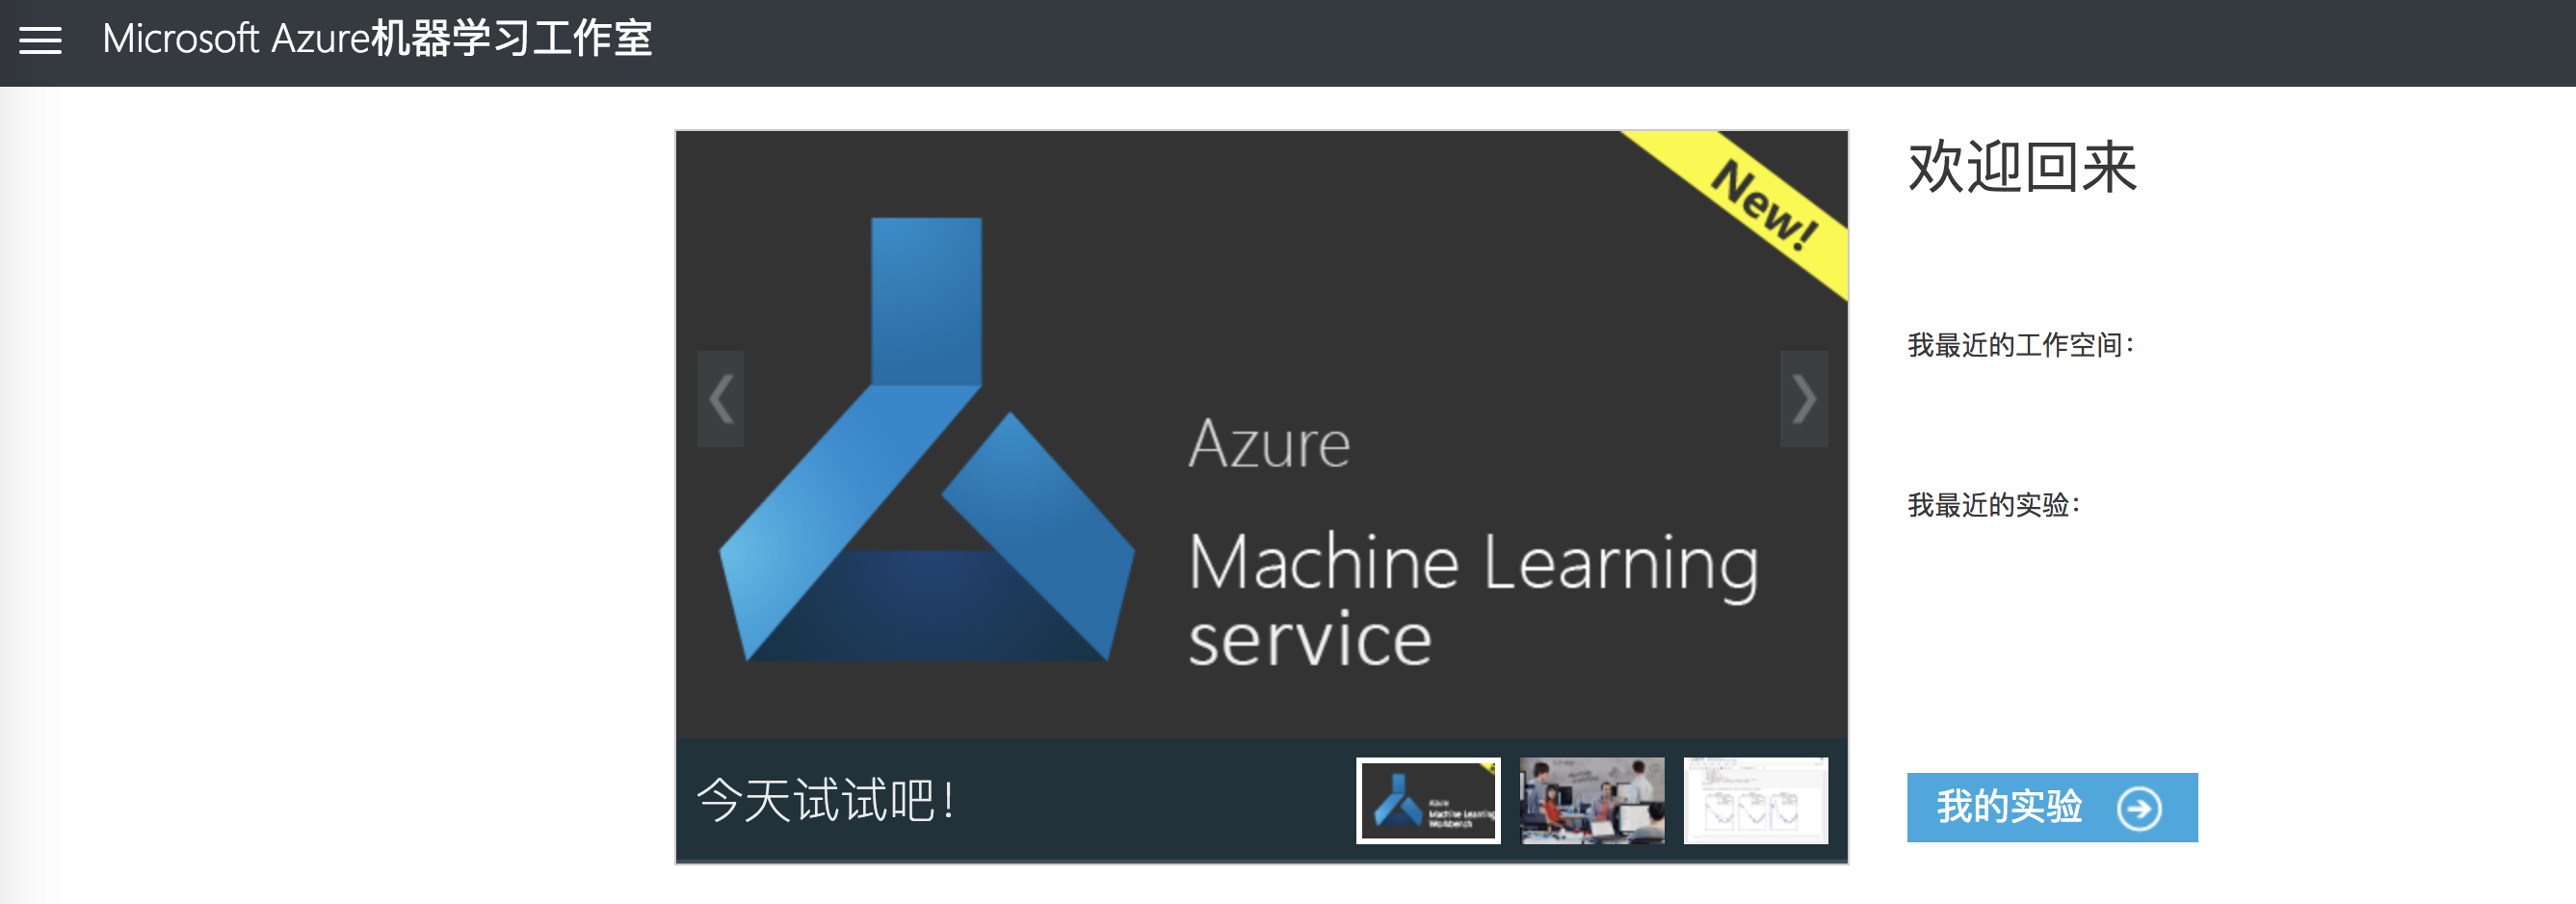 Azure平台简介2.png